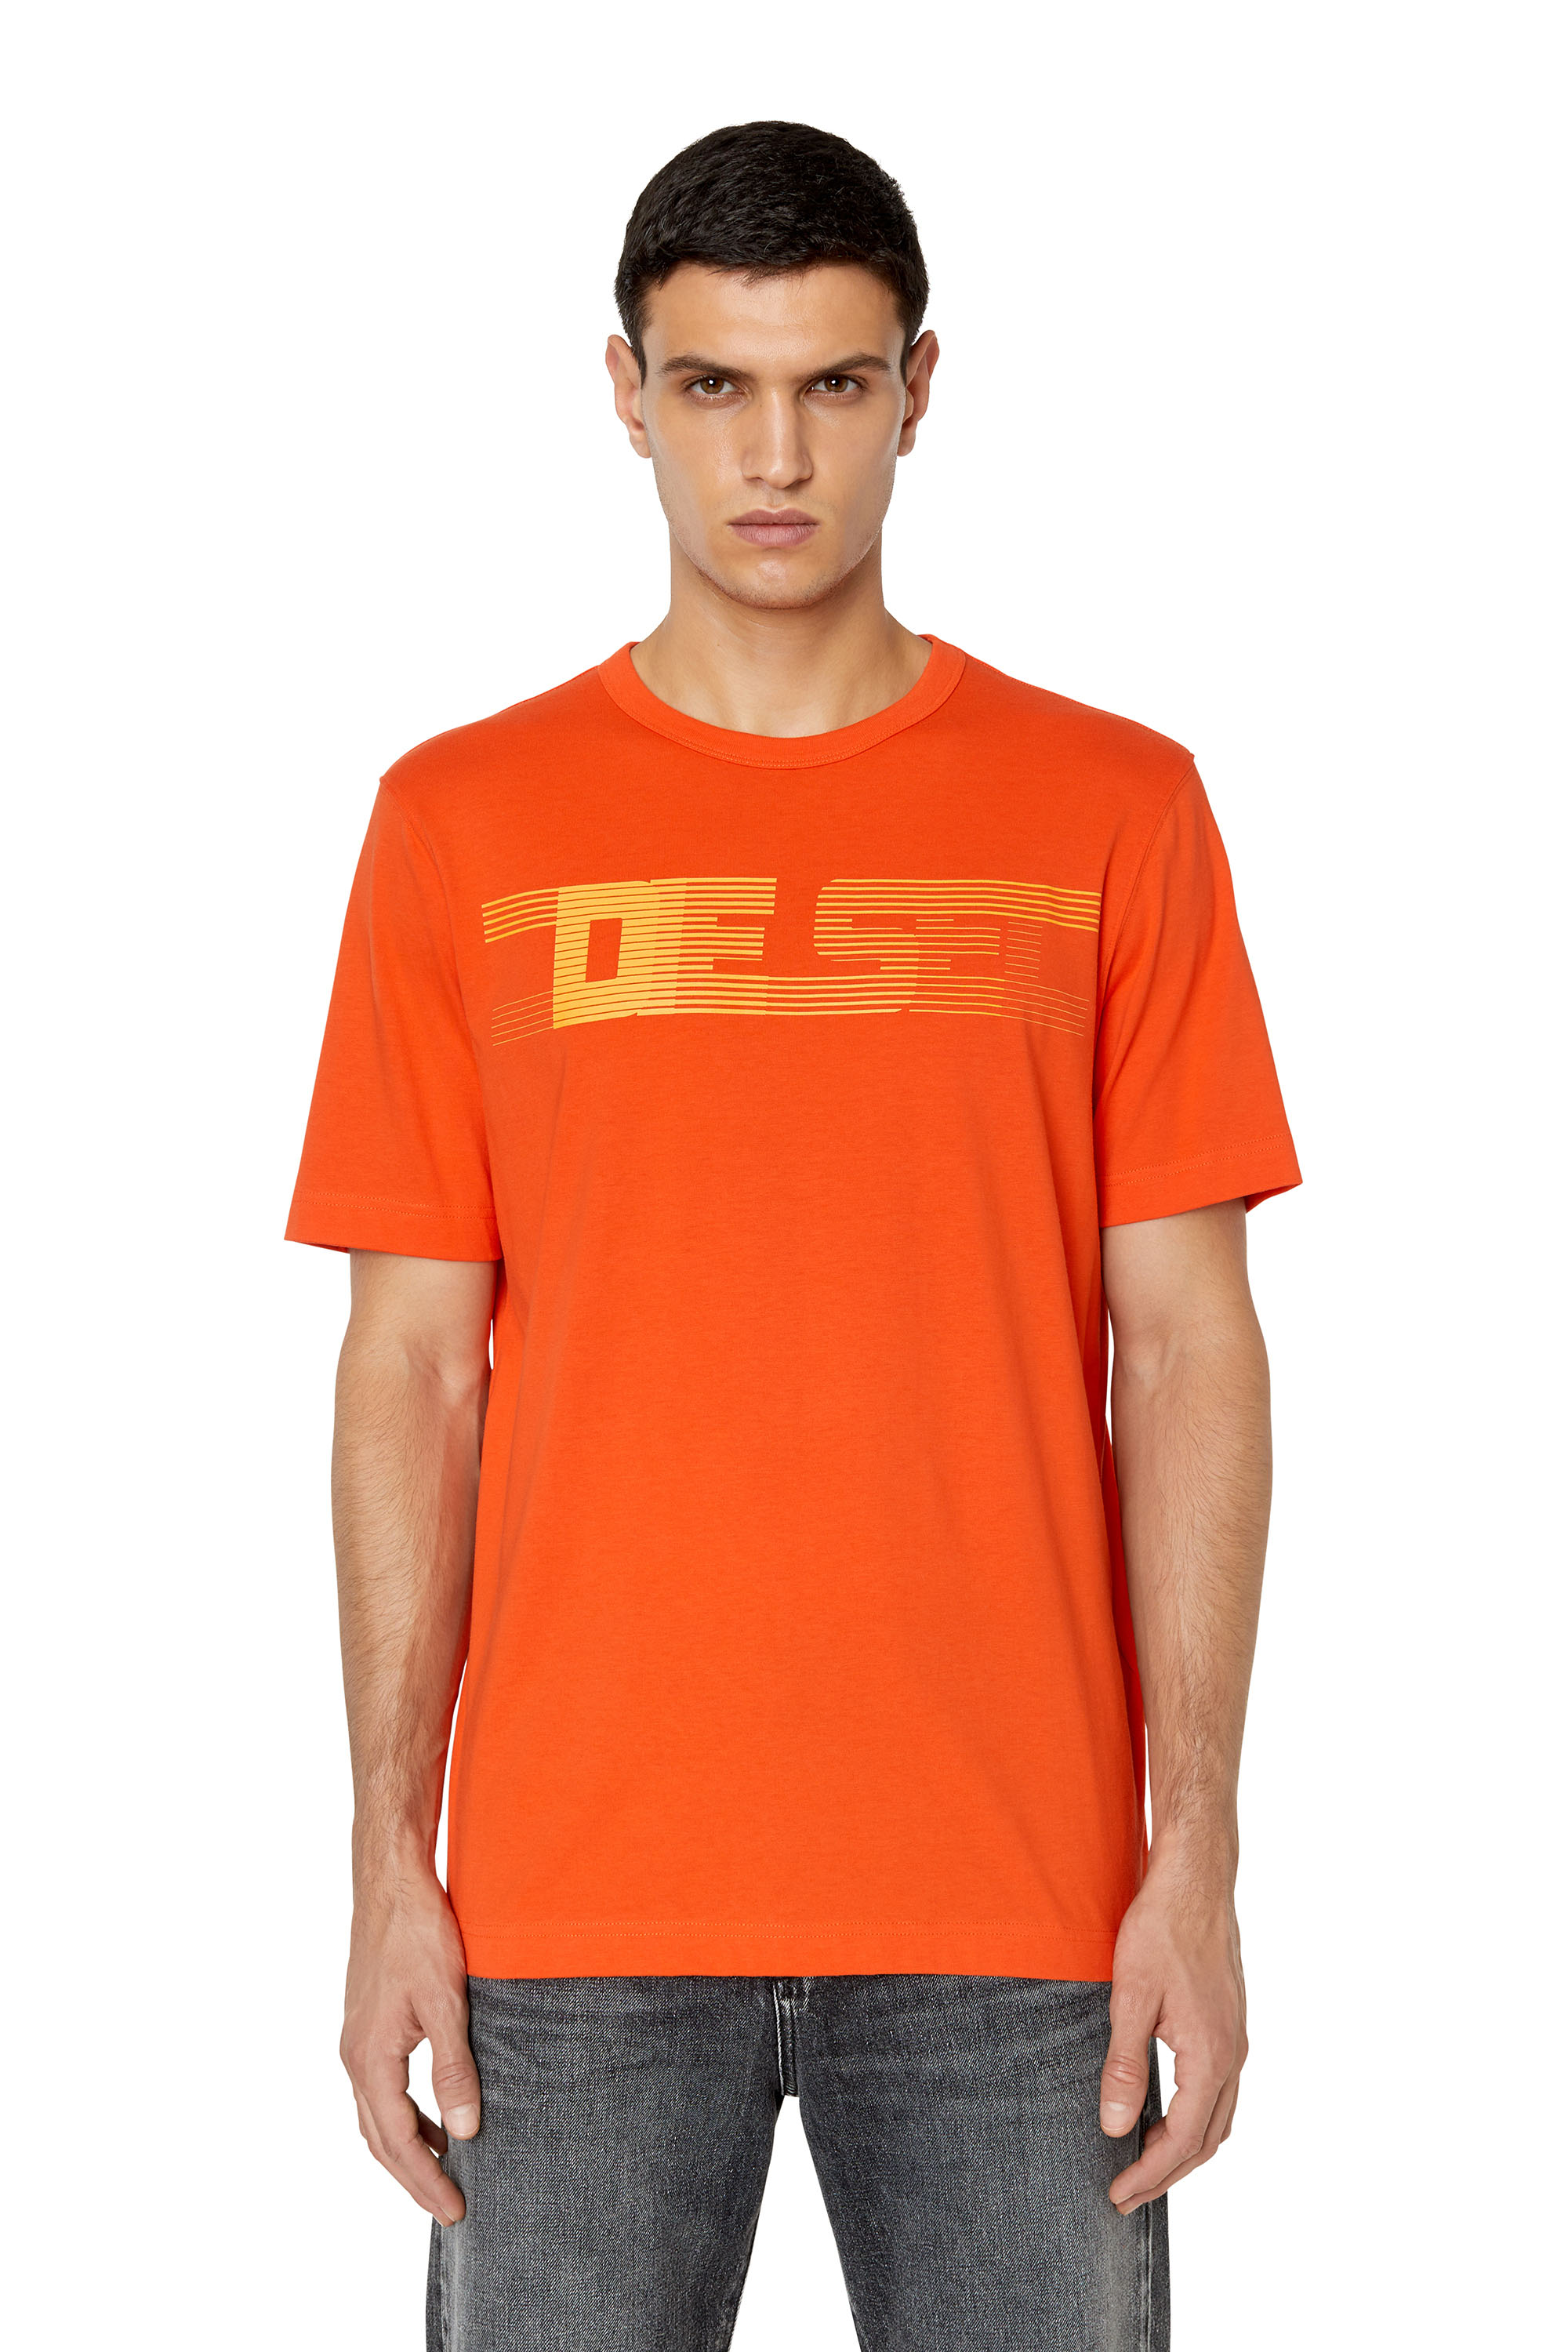 Diesel - T-JUST-E19, Arancione - Image 2